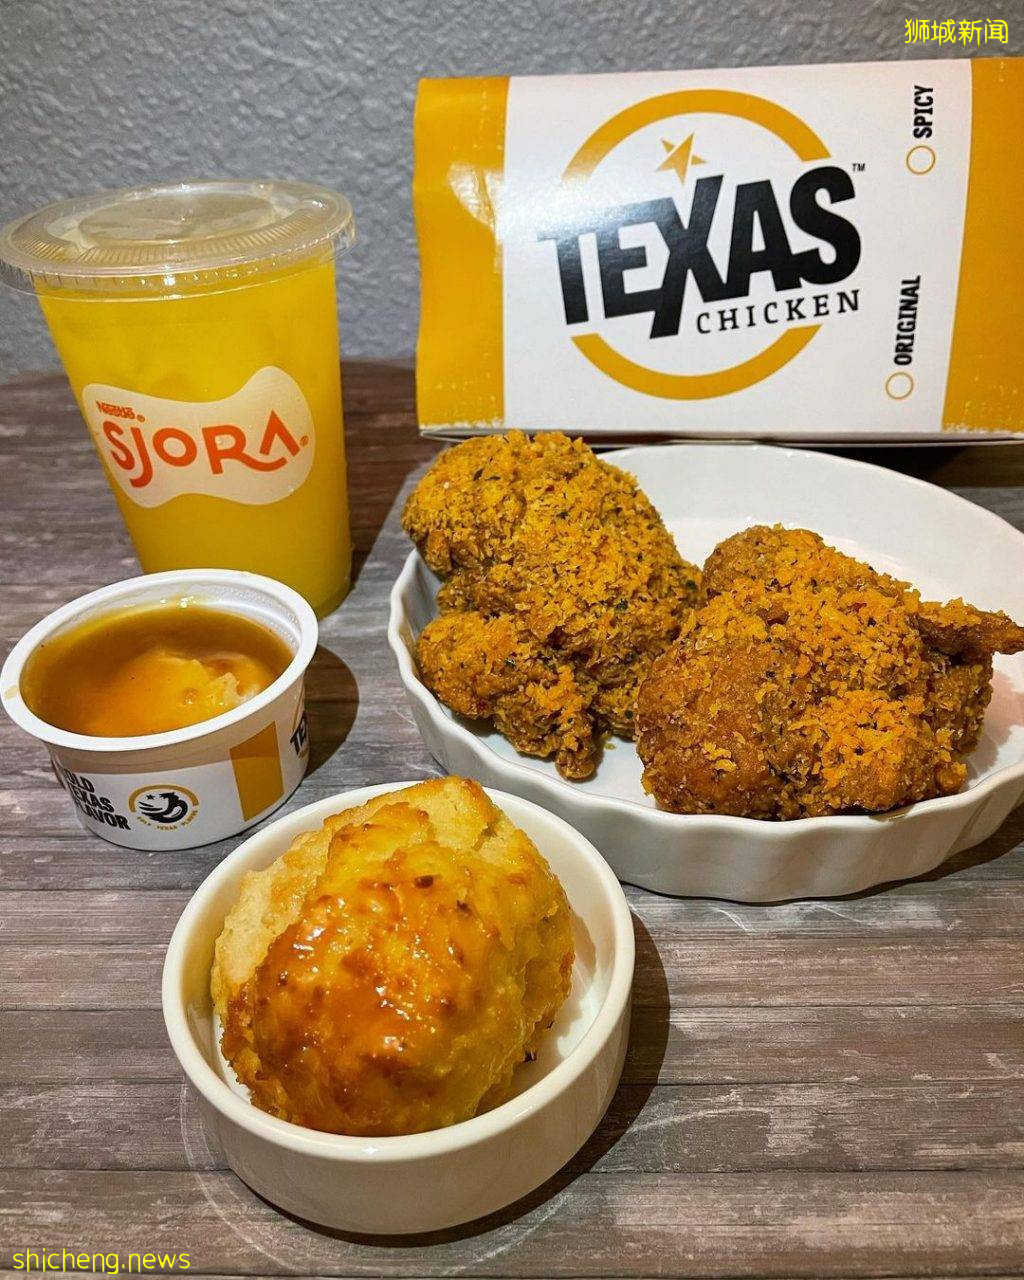 Texas Chicken咸蛋炸鸡新品限时登场🍗香、酥、脆，售价$10.60起💸消费满$10可玩线上密室逃脱